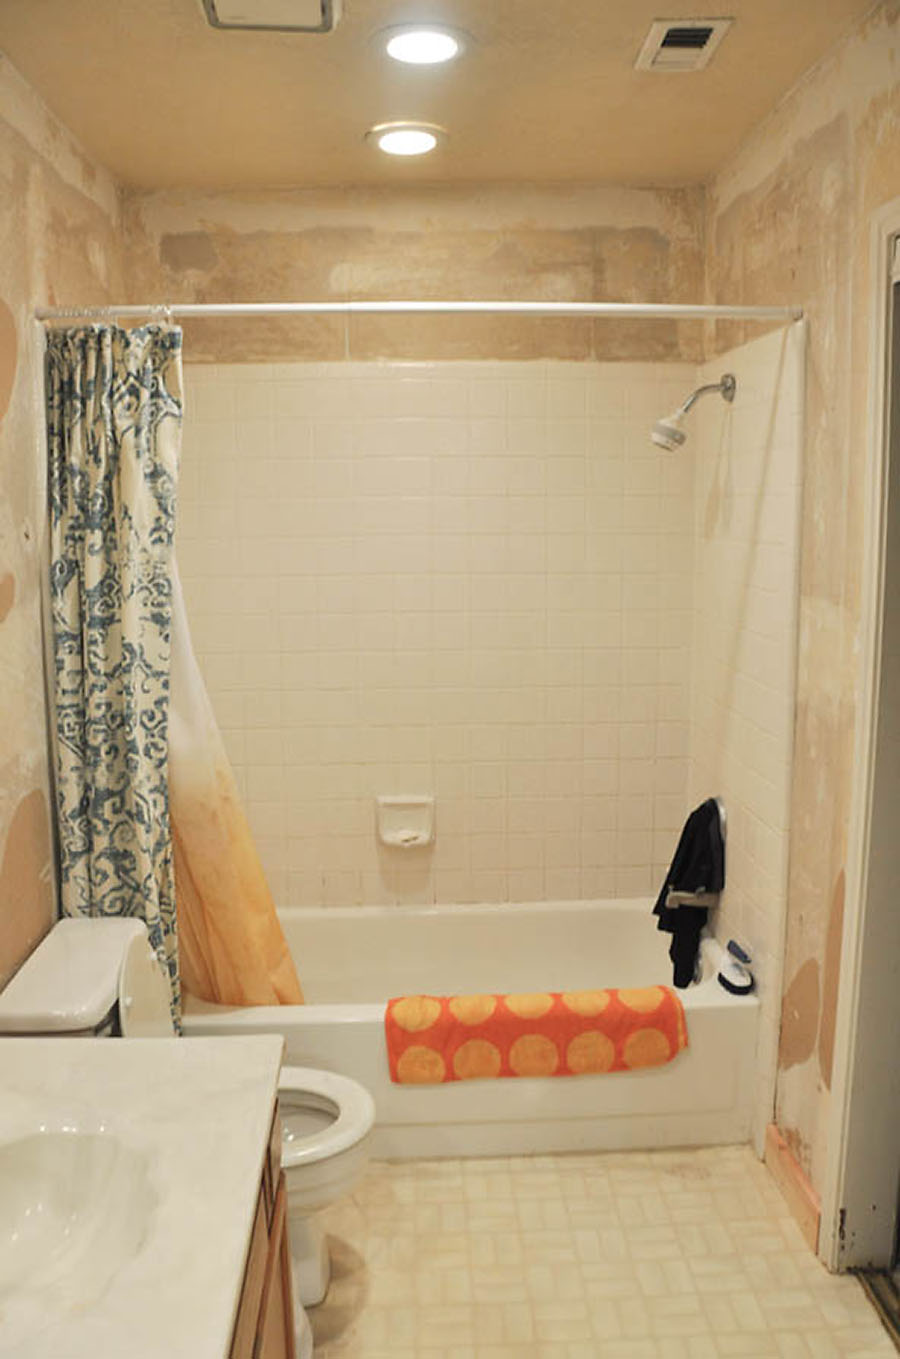 Can You Turn a Shower Into a Bathtub?